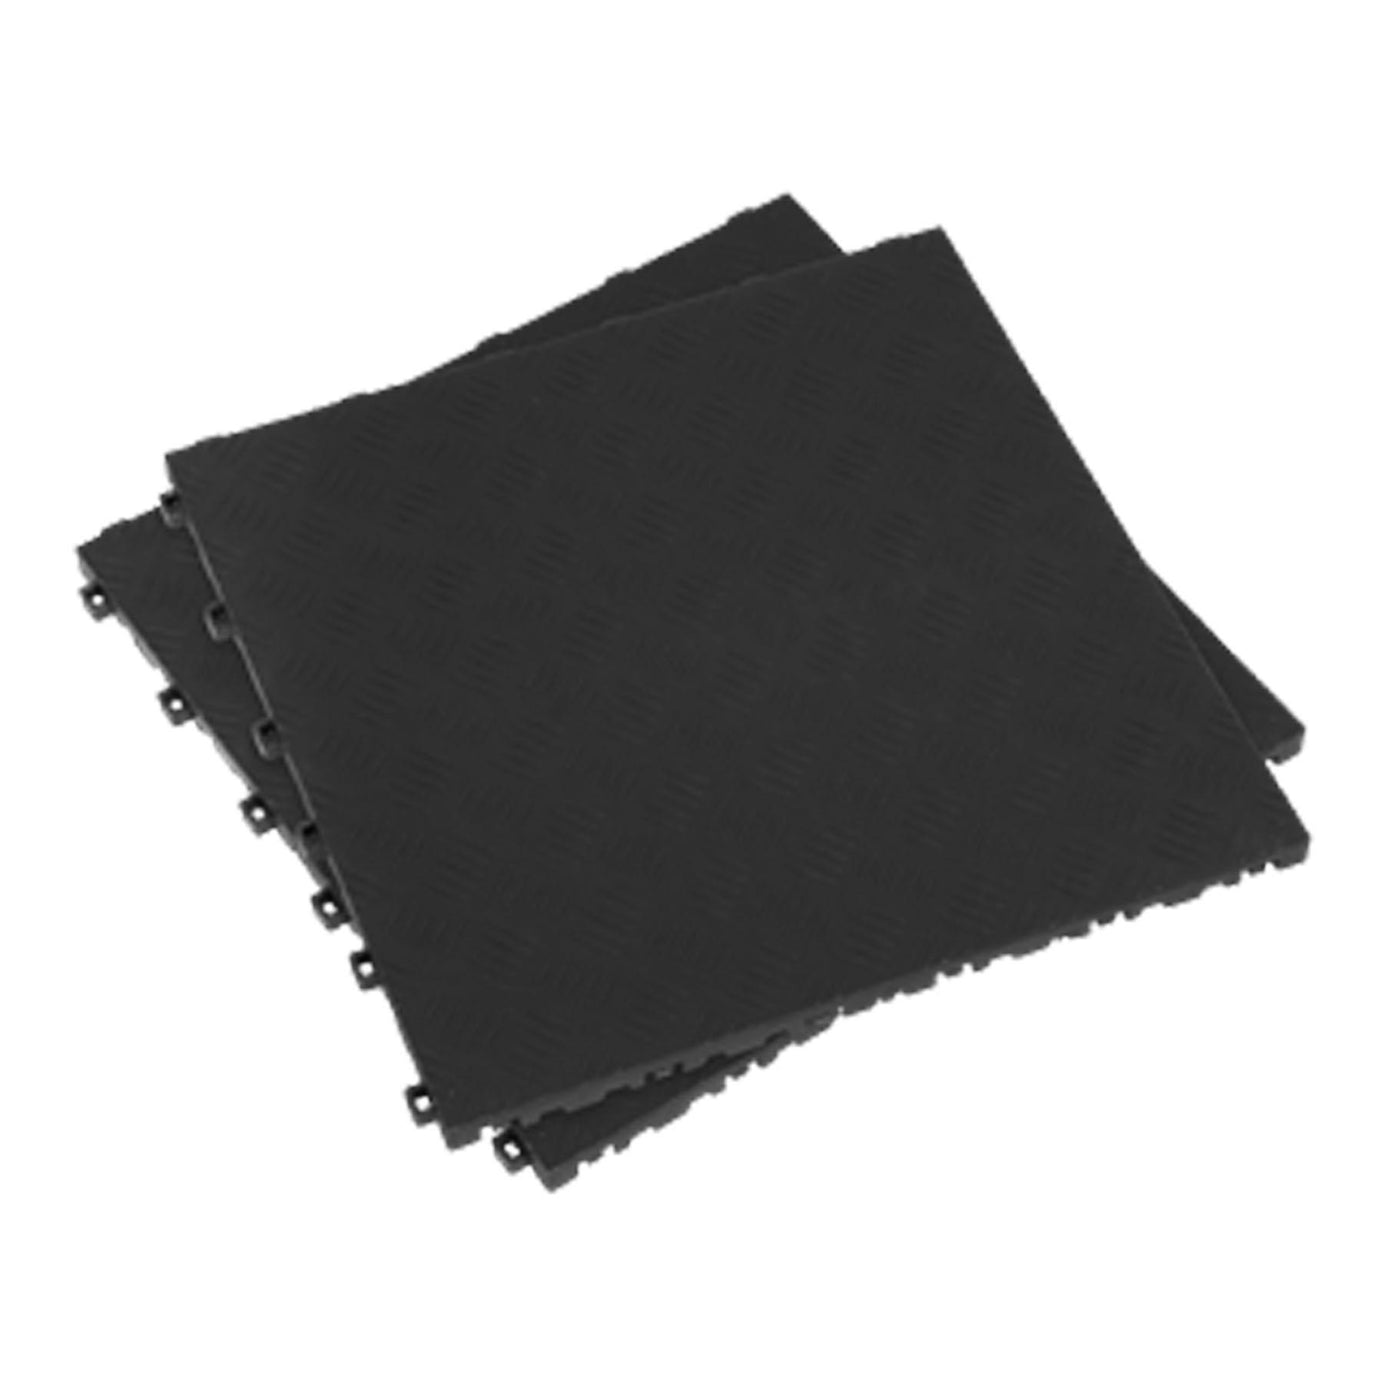 Sealey Polypropylene Floor Tile-Black Treadplate 400x400mm Pk of 9